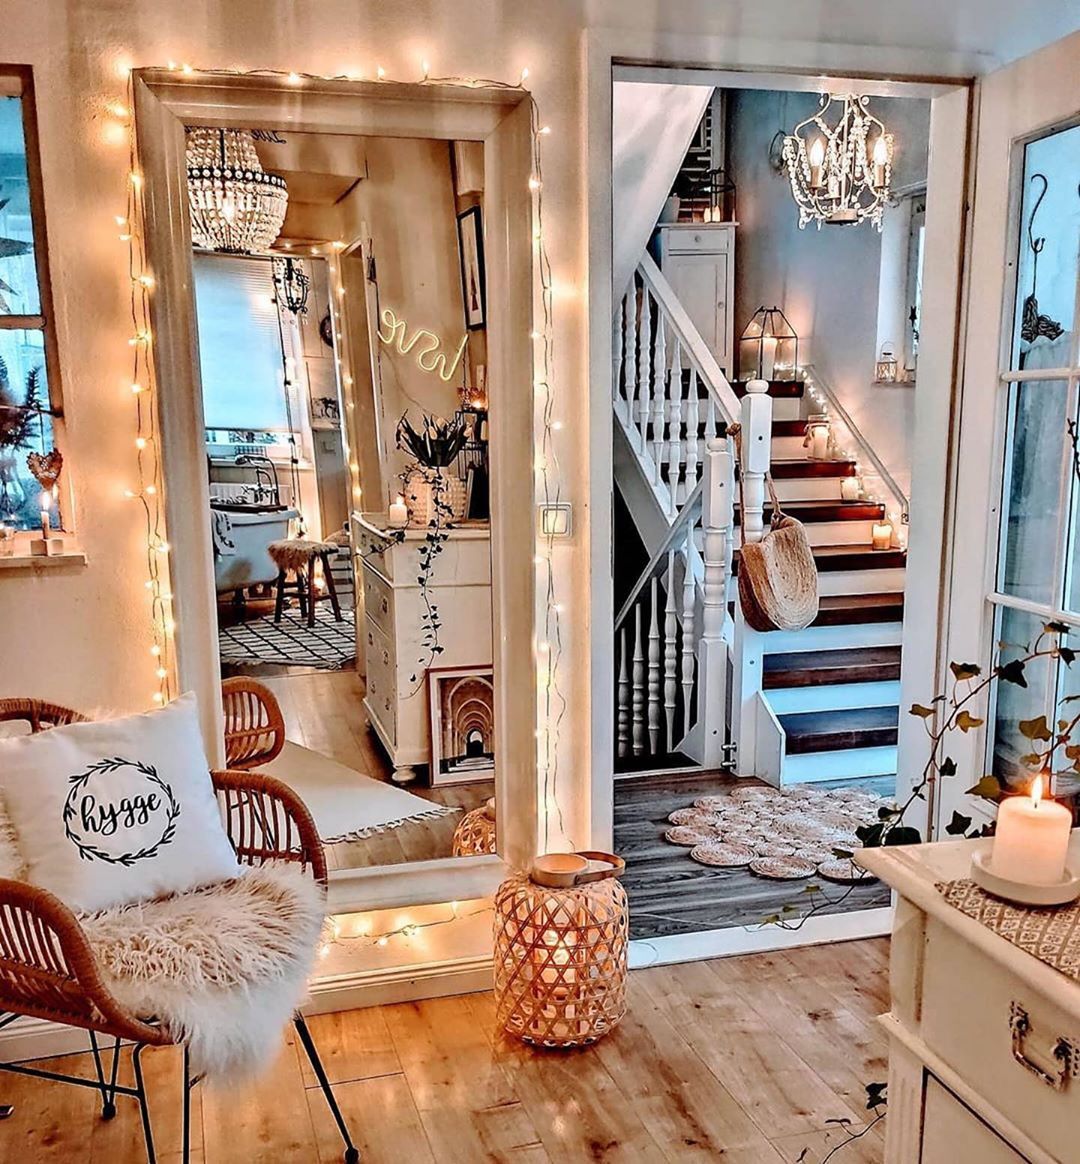 Dresslily - 🌟Fall Home decor inspiration!!⁣
Pict by @my_homely_decor⁣
#Dresslily